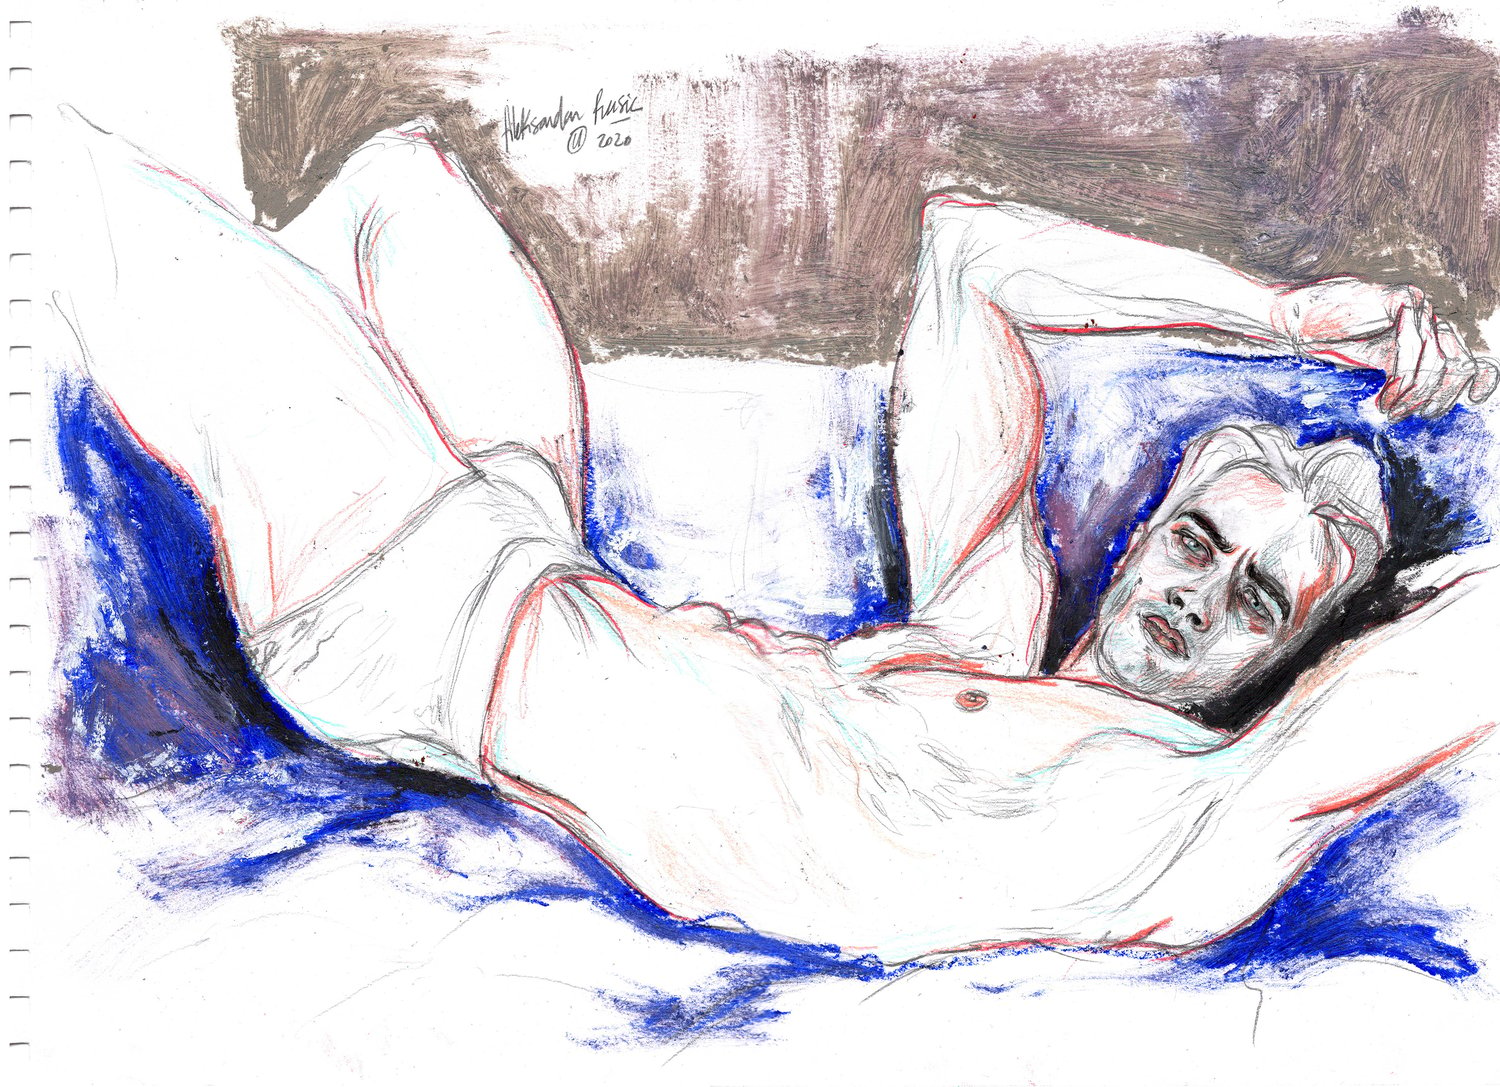 Aleksandar laying illustration